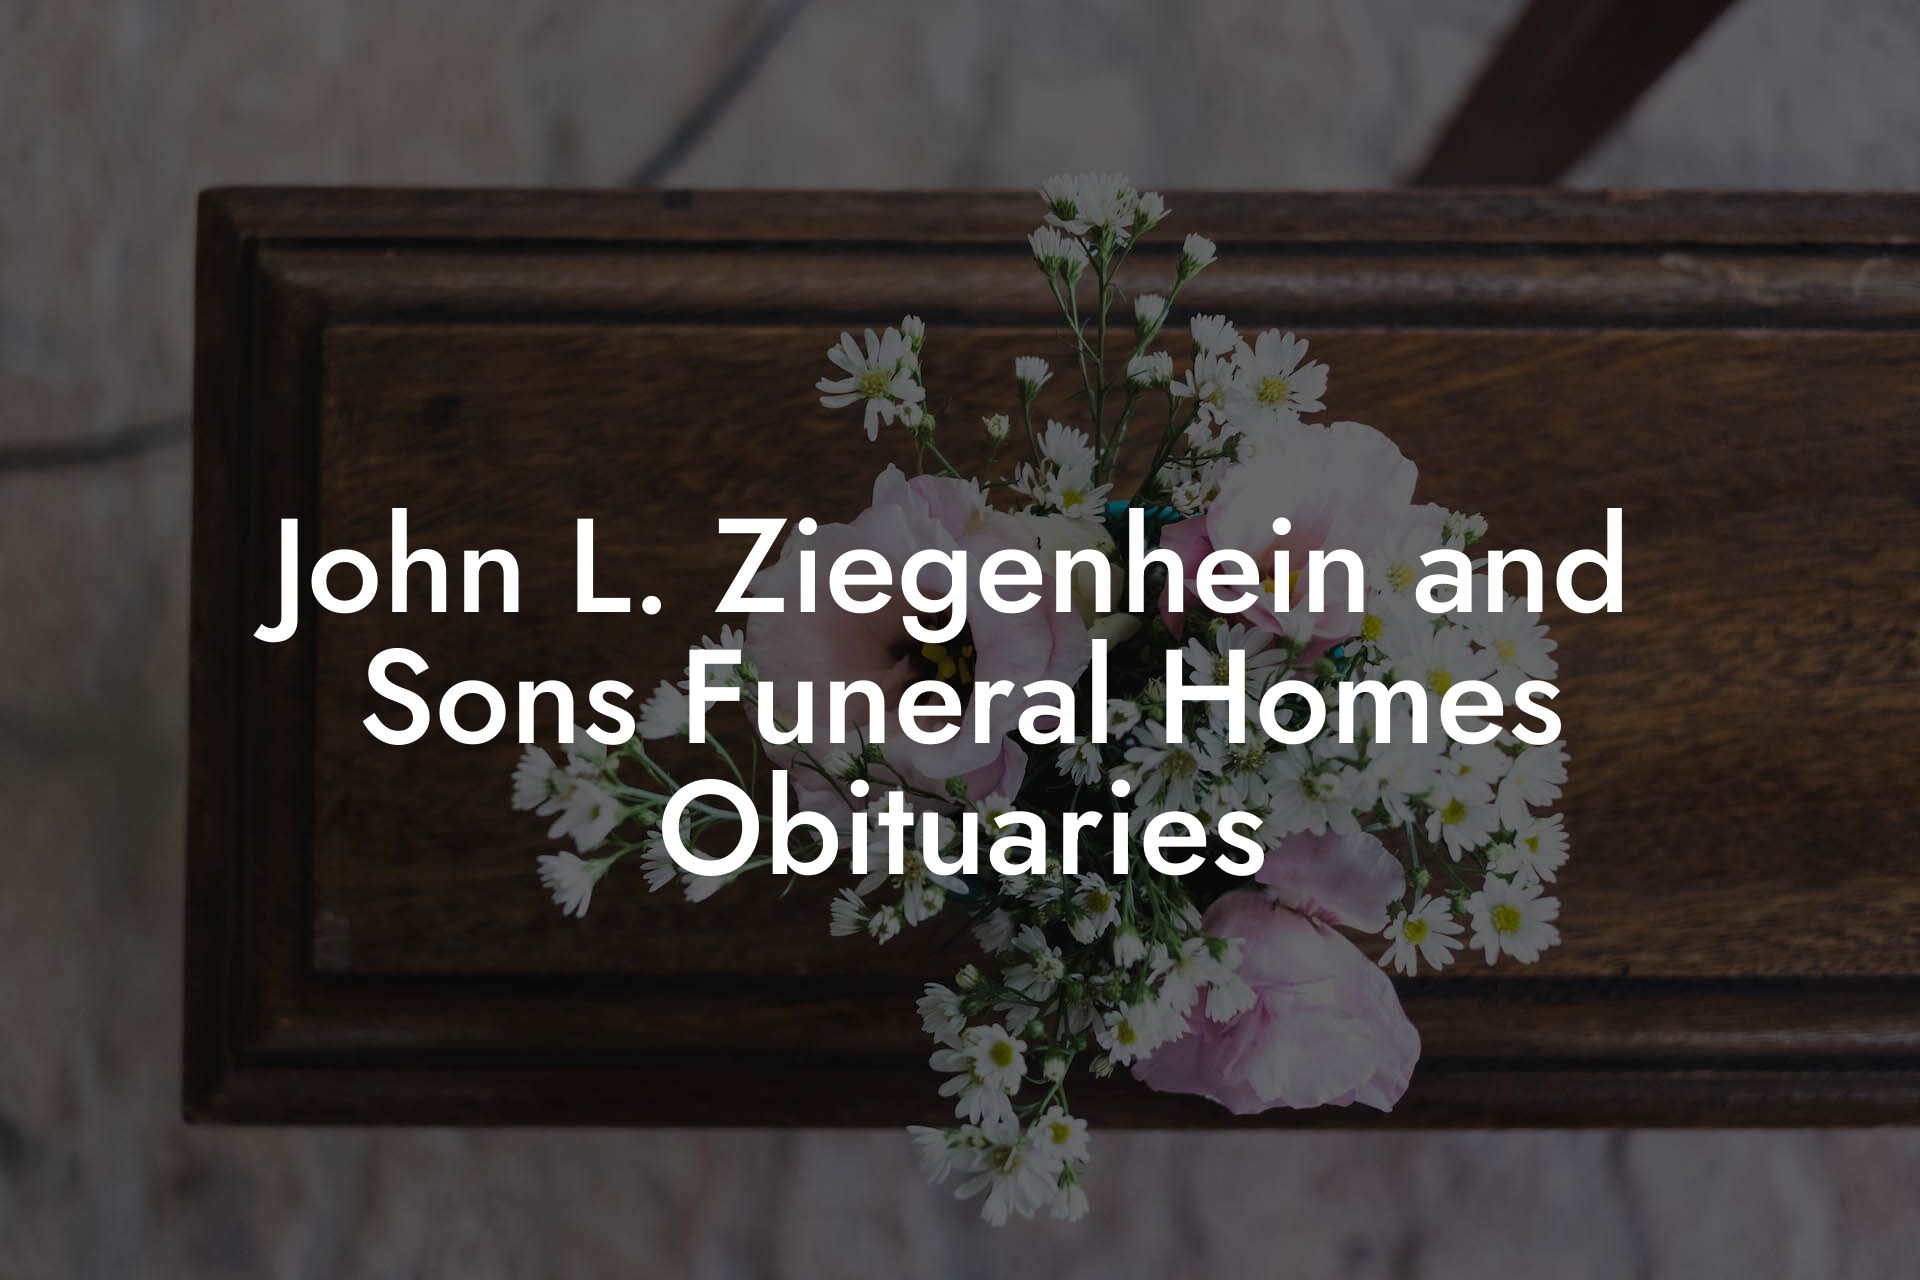 John L. Ziegenhein and Sons Funeral Homes Obituaries